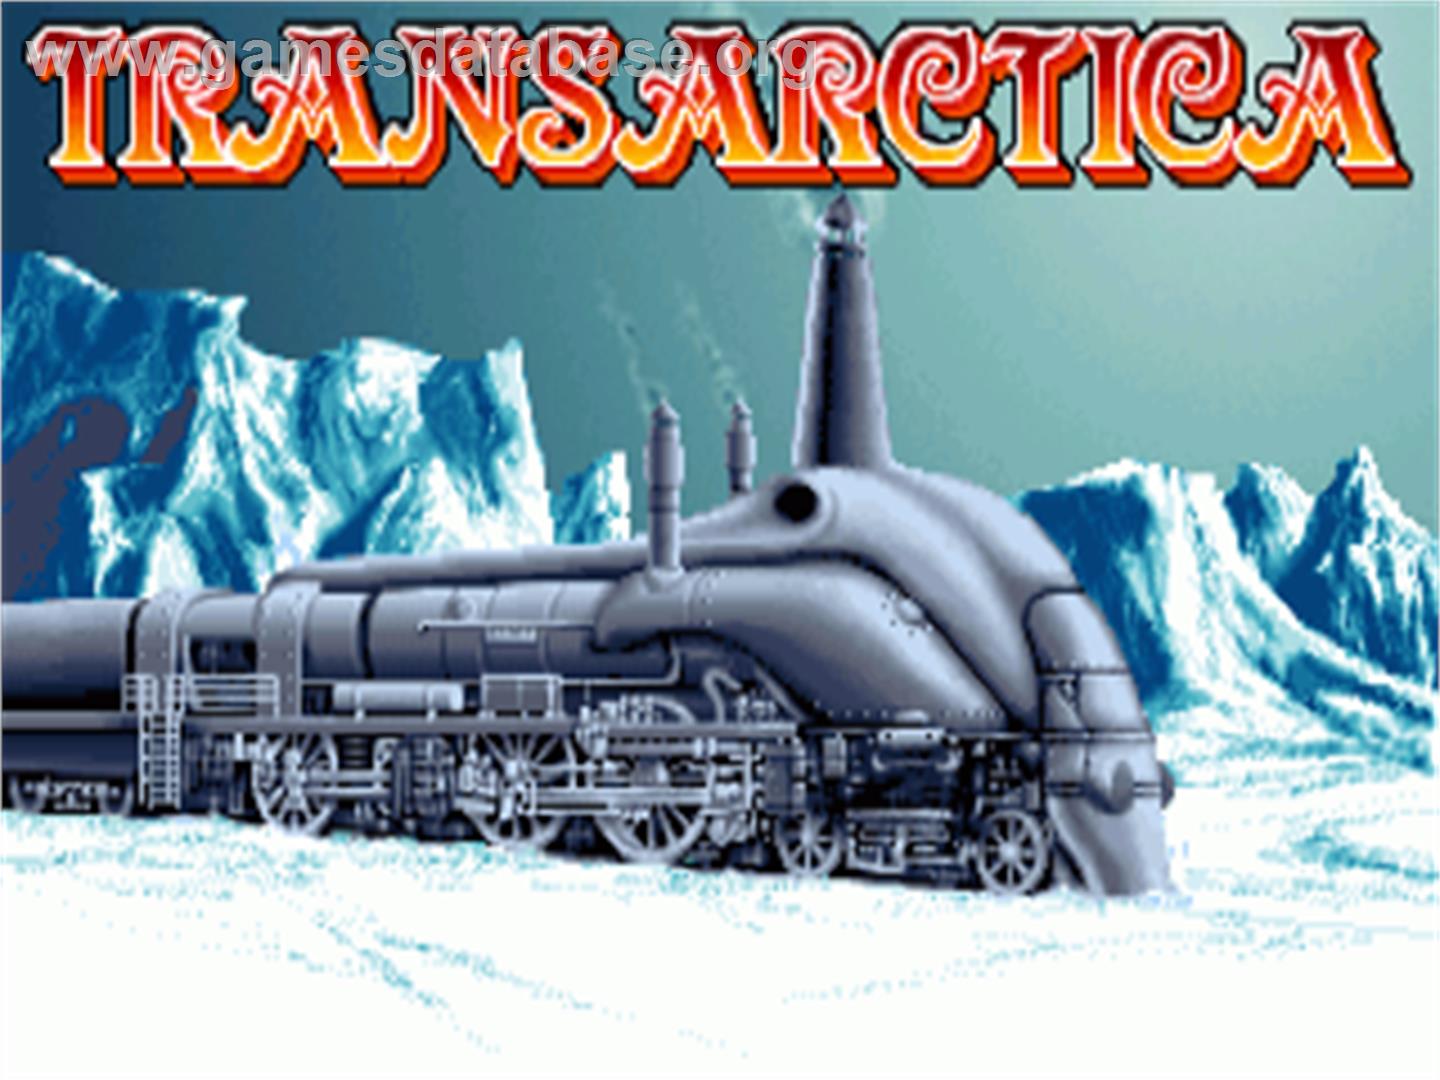 Transarctica - Commodore Amiga - Artwork - Title Screen